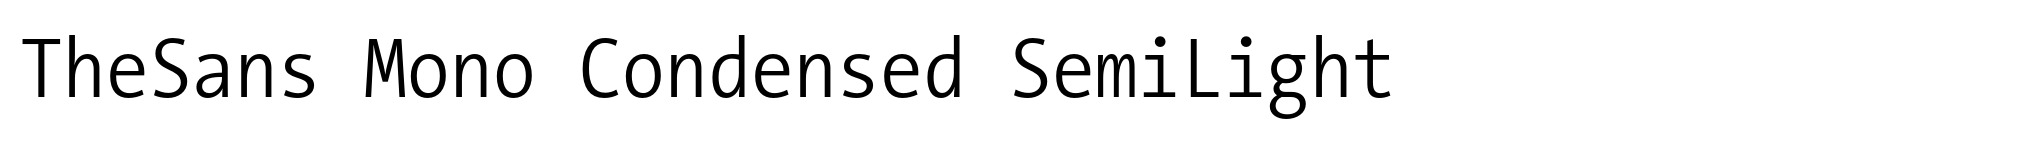 TheSans Mono Condensed SemiLight image